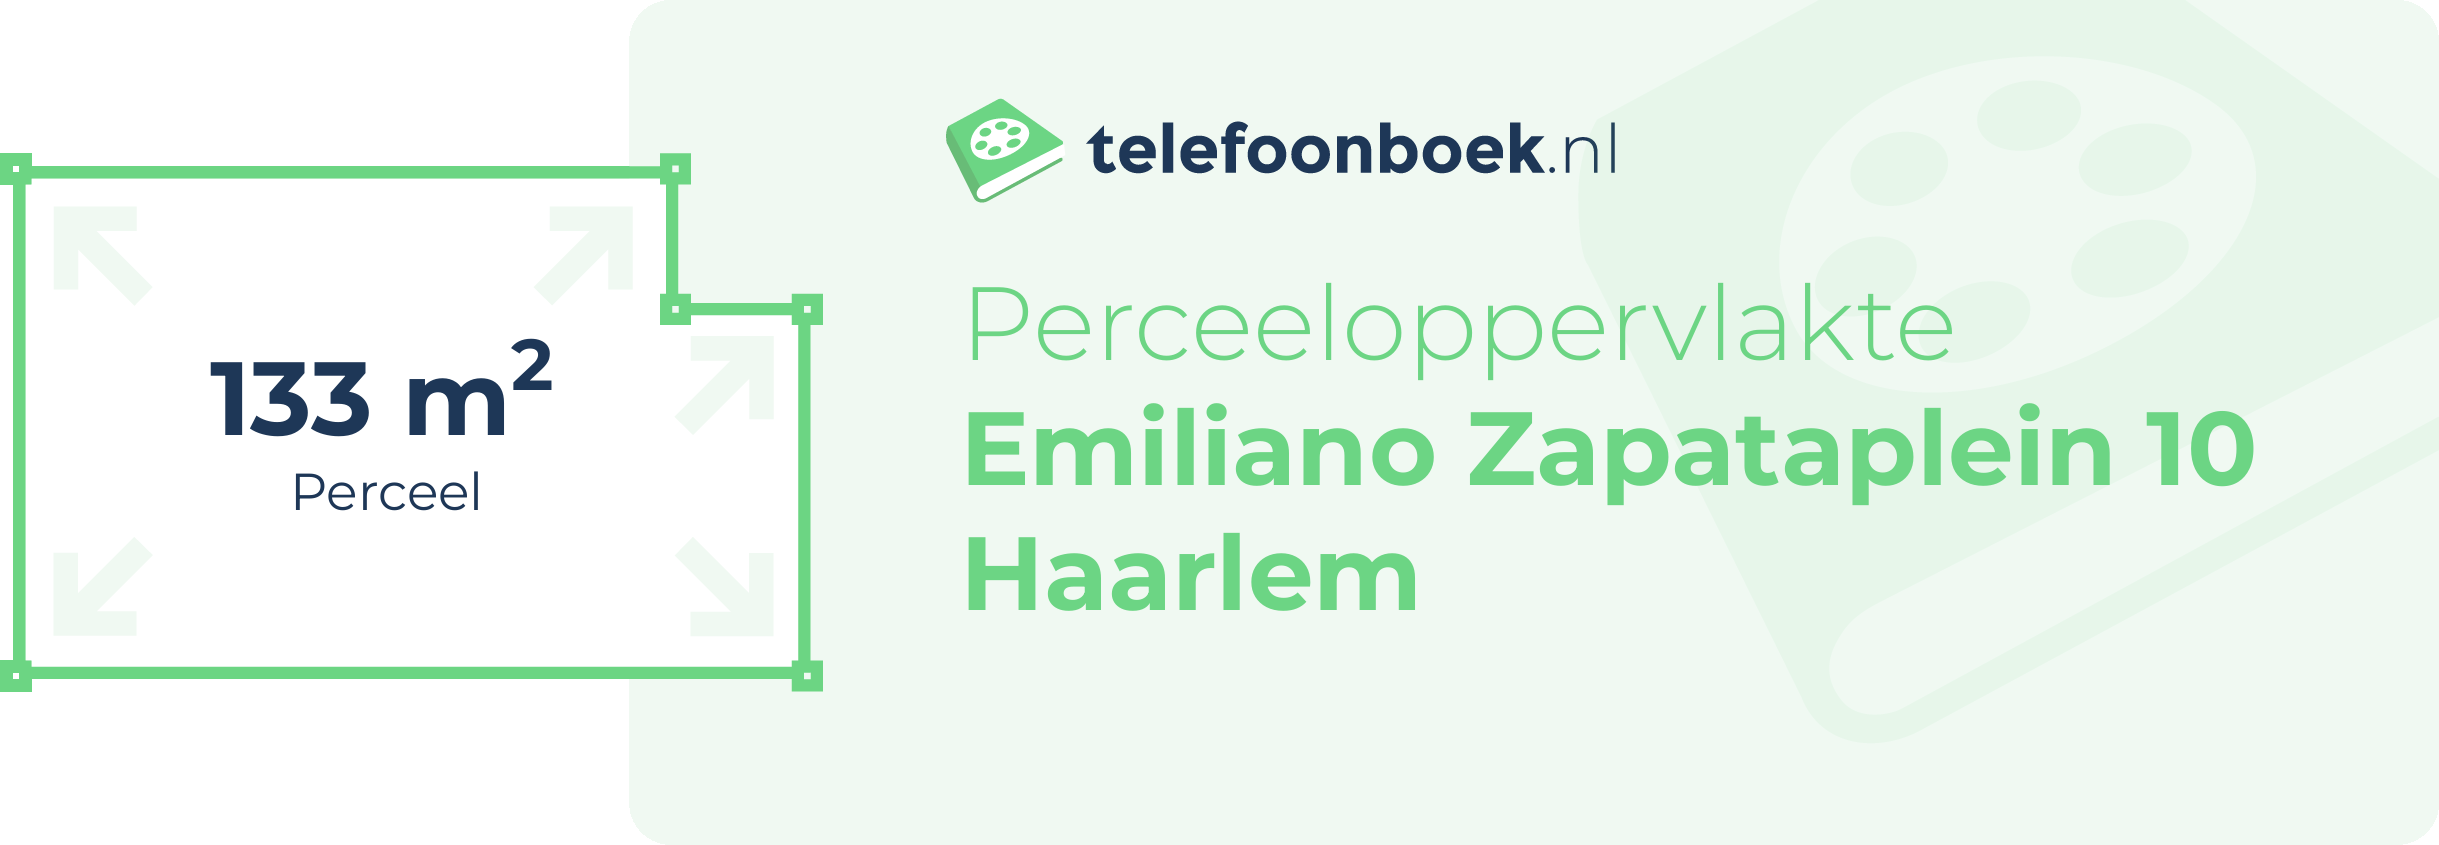 Perceeloppervlakte Emiliano Zapataplein 10 Haarlem